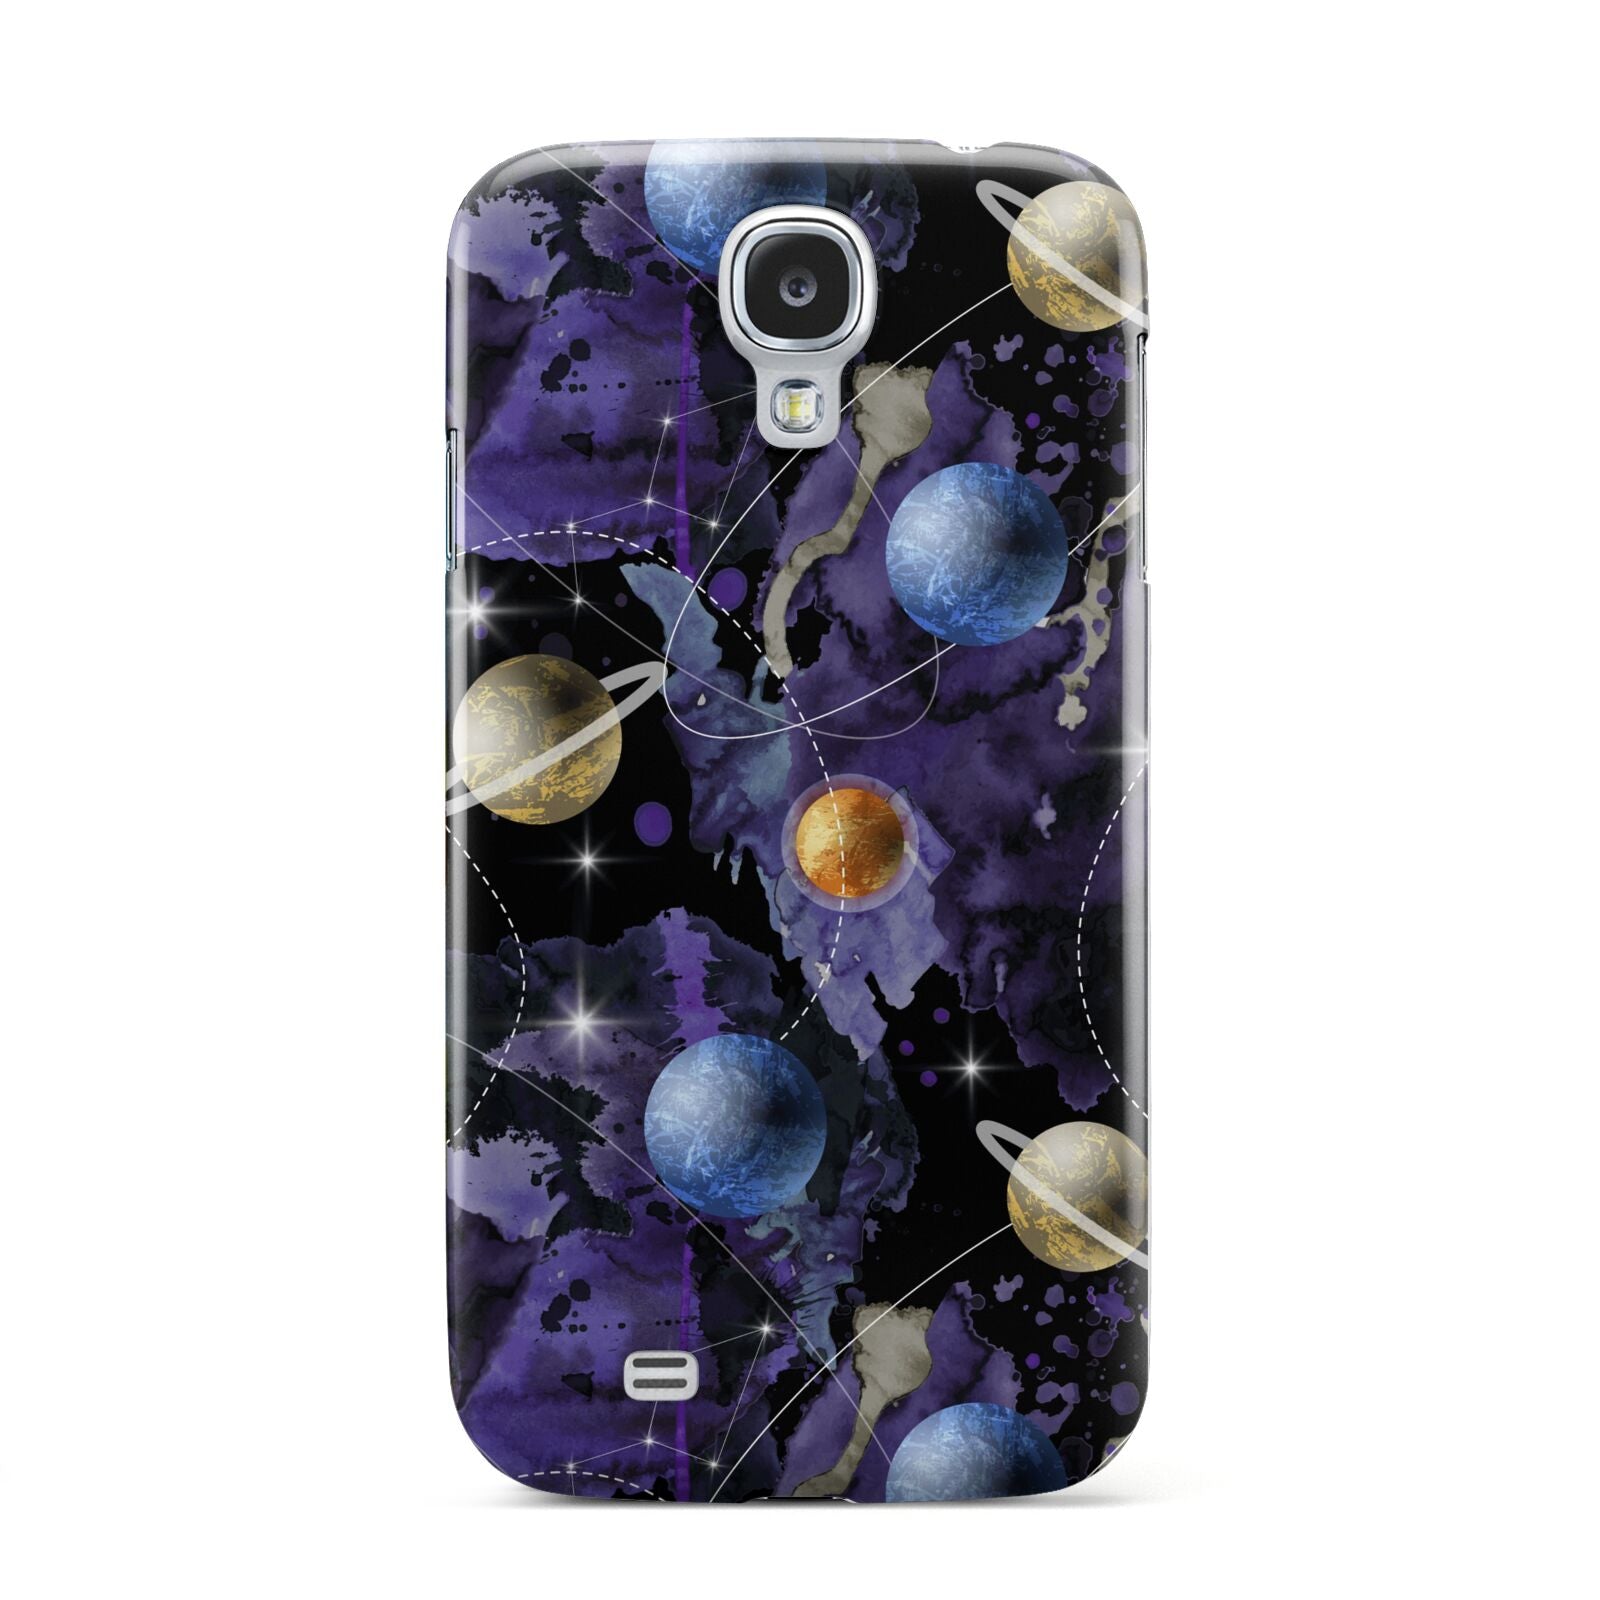 Planet Samsung Galaxy S4 Case